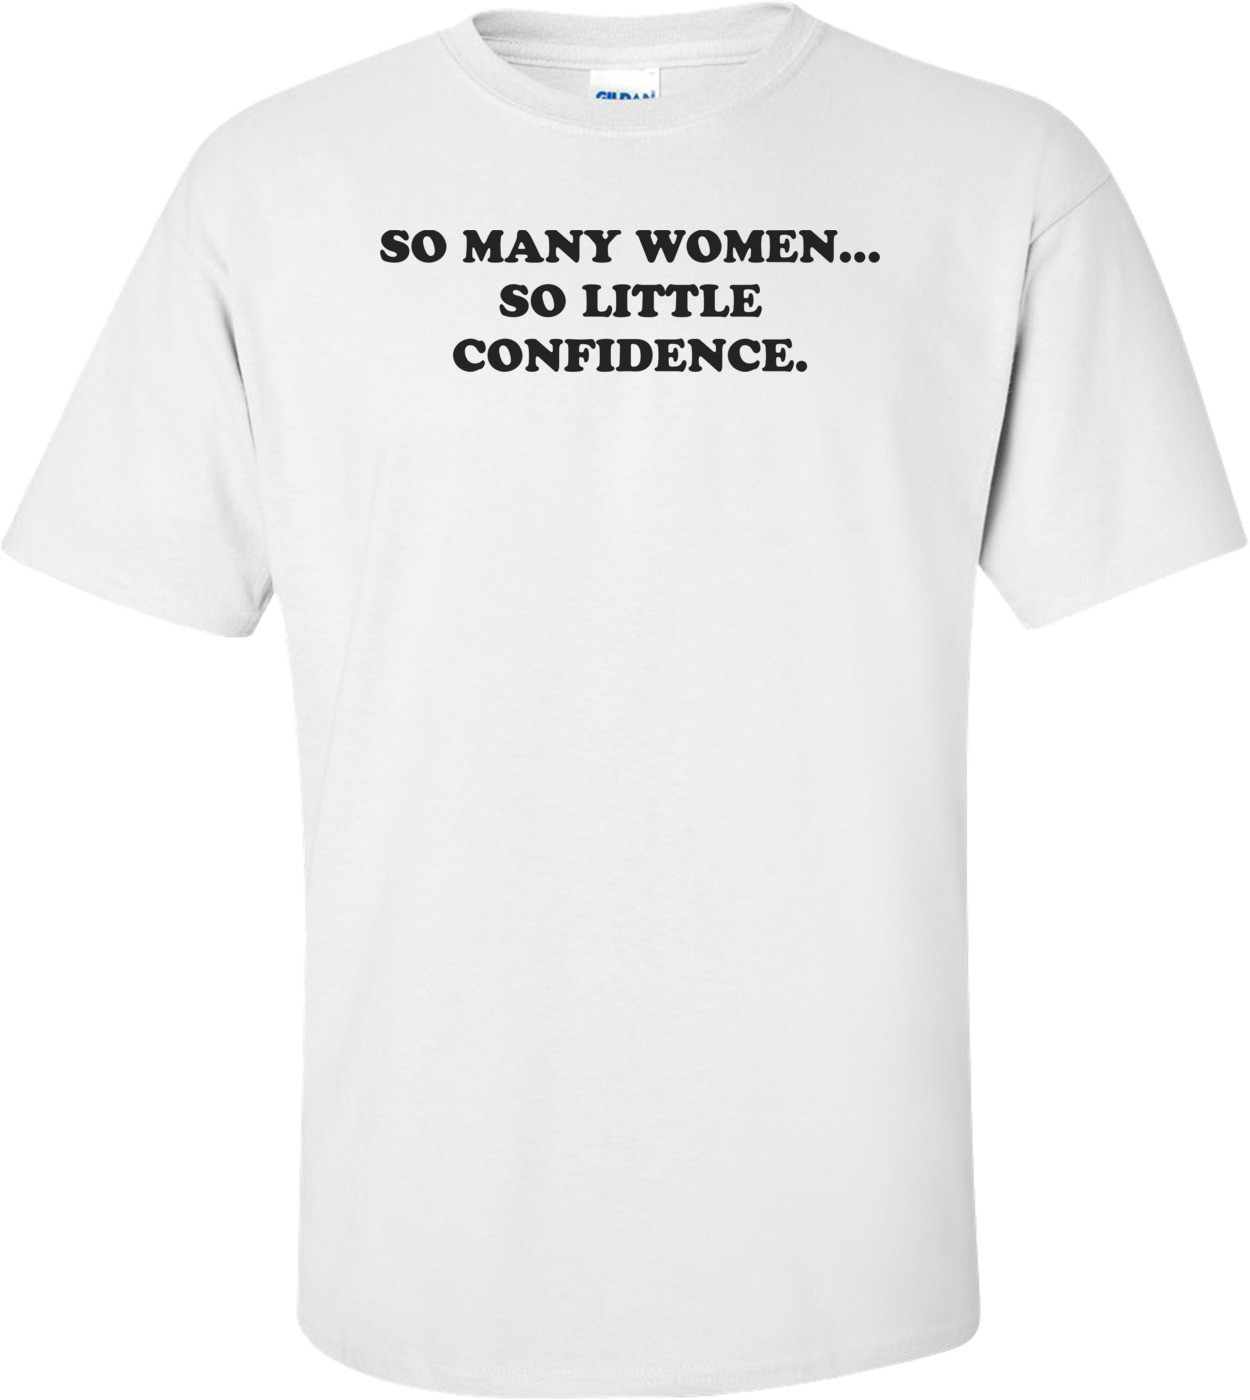 SO MANY WOMEN... SO LITTLE CONFIDENCE. Shirt